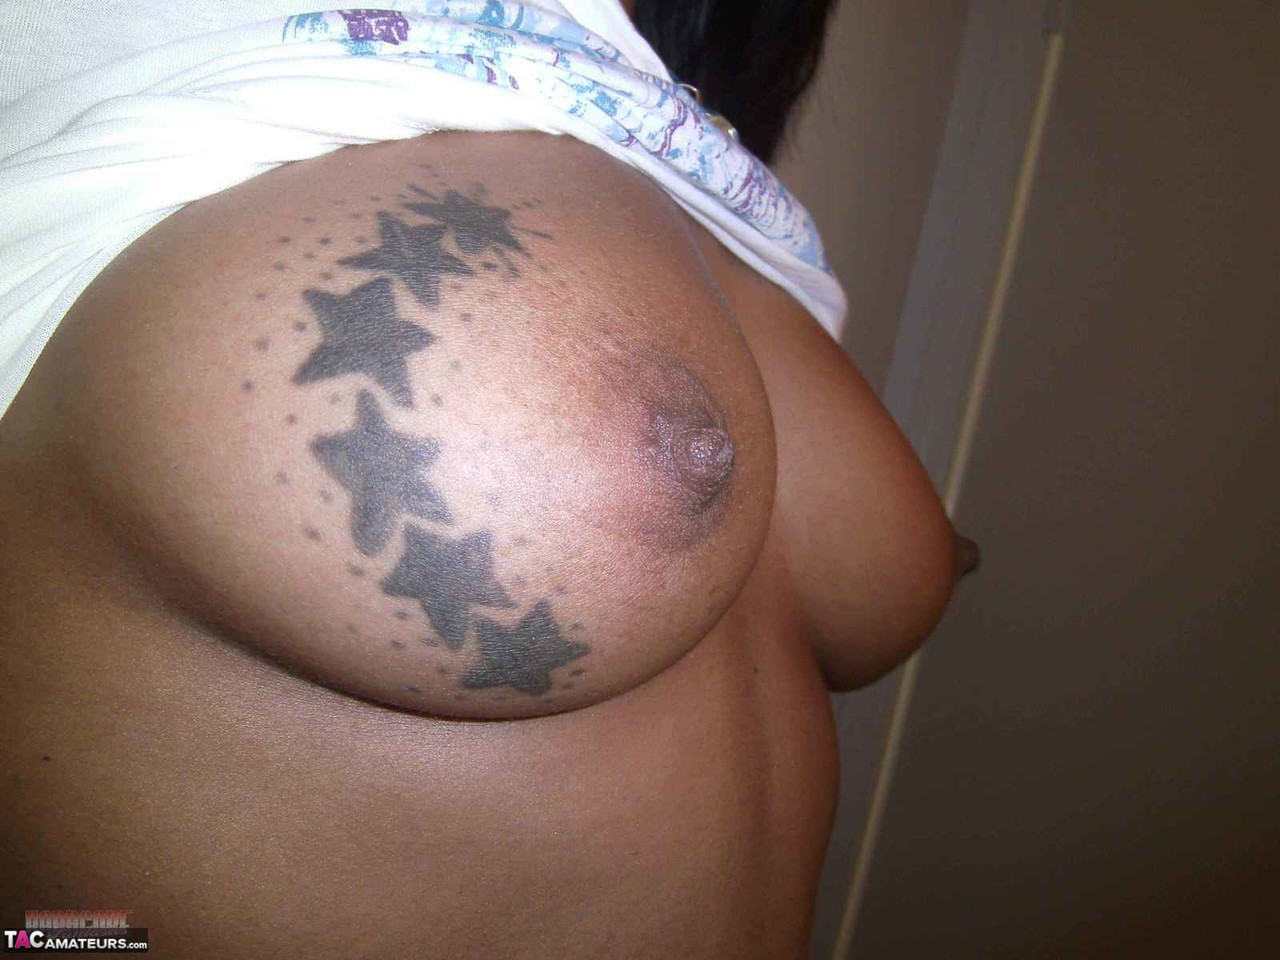 Ebony Amateur Takes Self Shots Of Her Big Tattooed Boobs And Bald Vagina